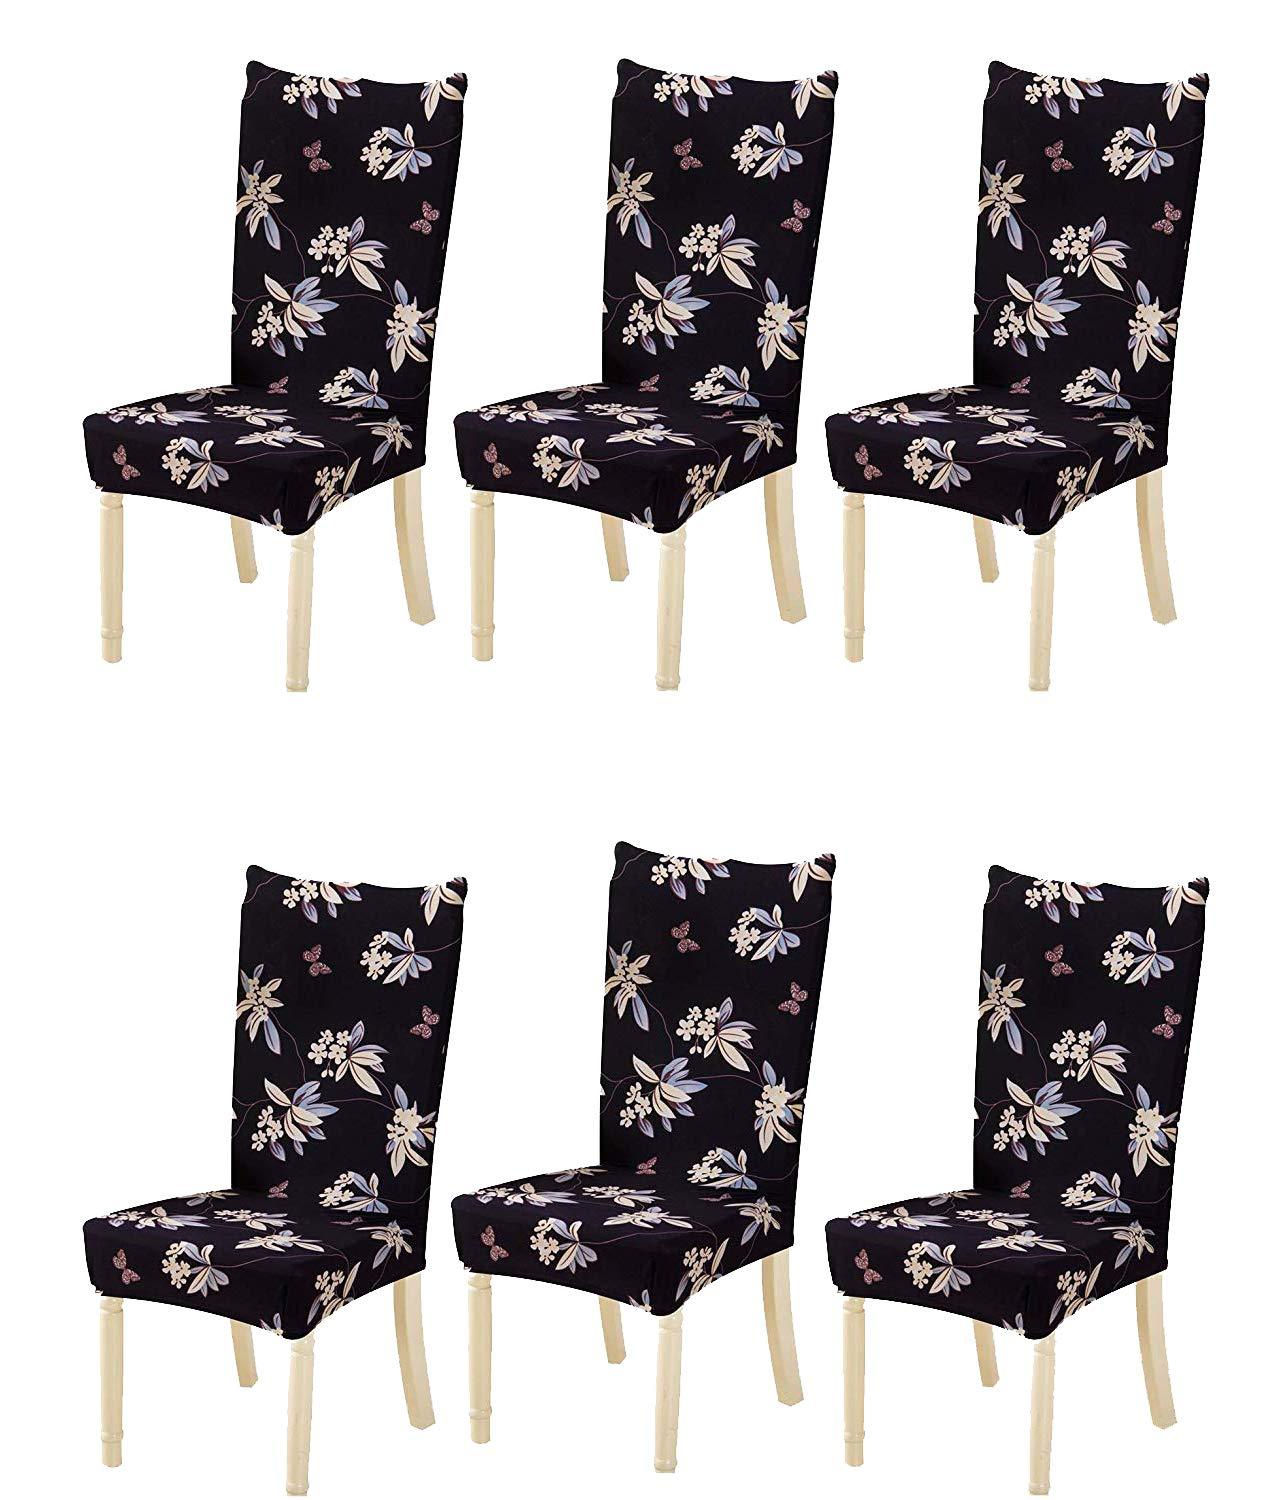 Printed Elastic Chair Cover - Black Flower